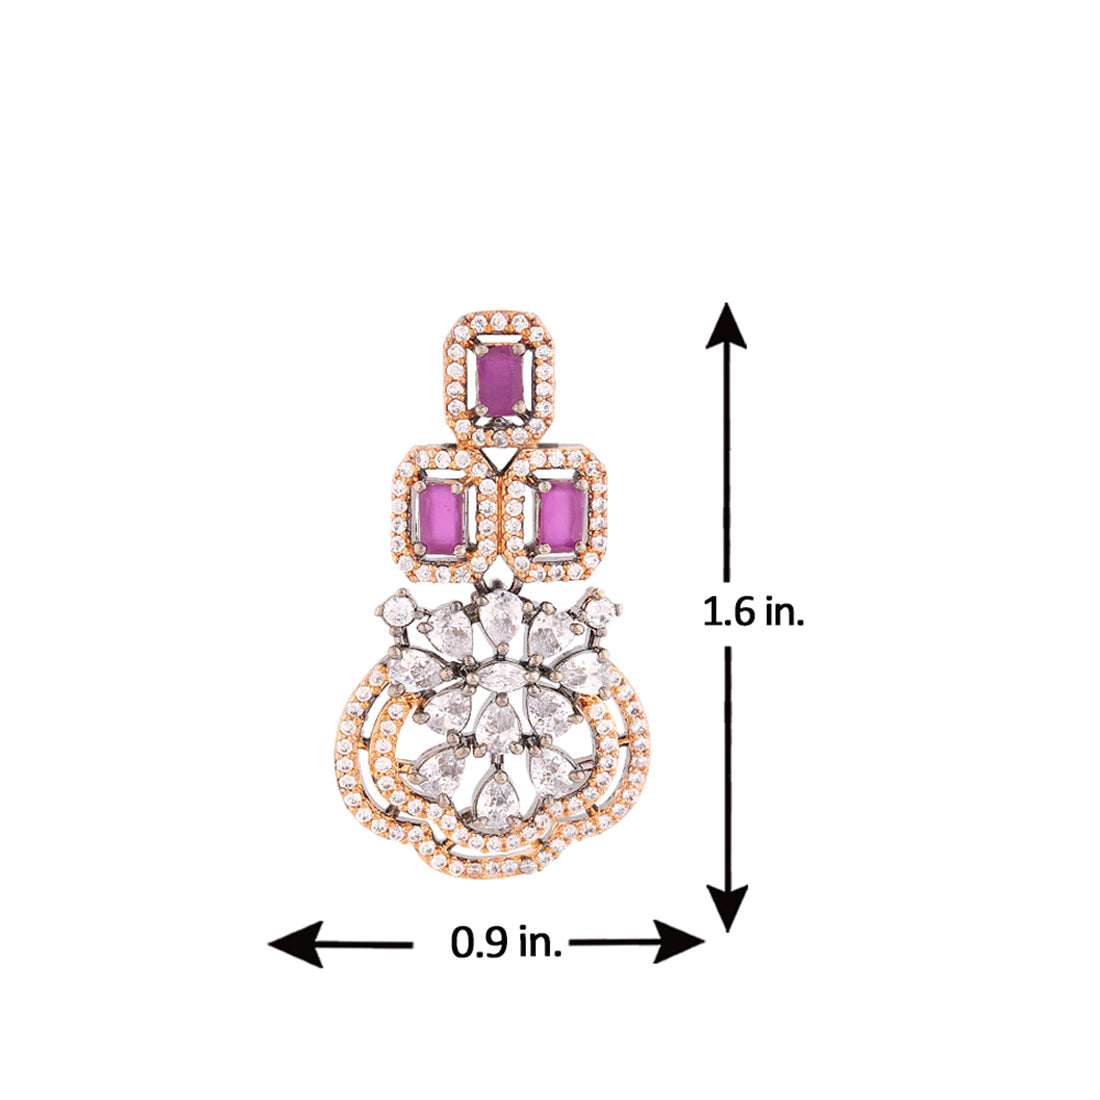 Zircon Gemstones Adorned Cocktail Earrings